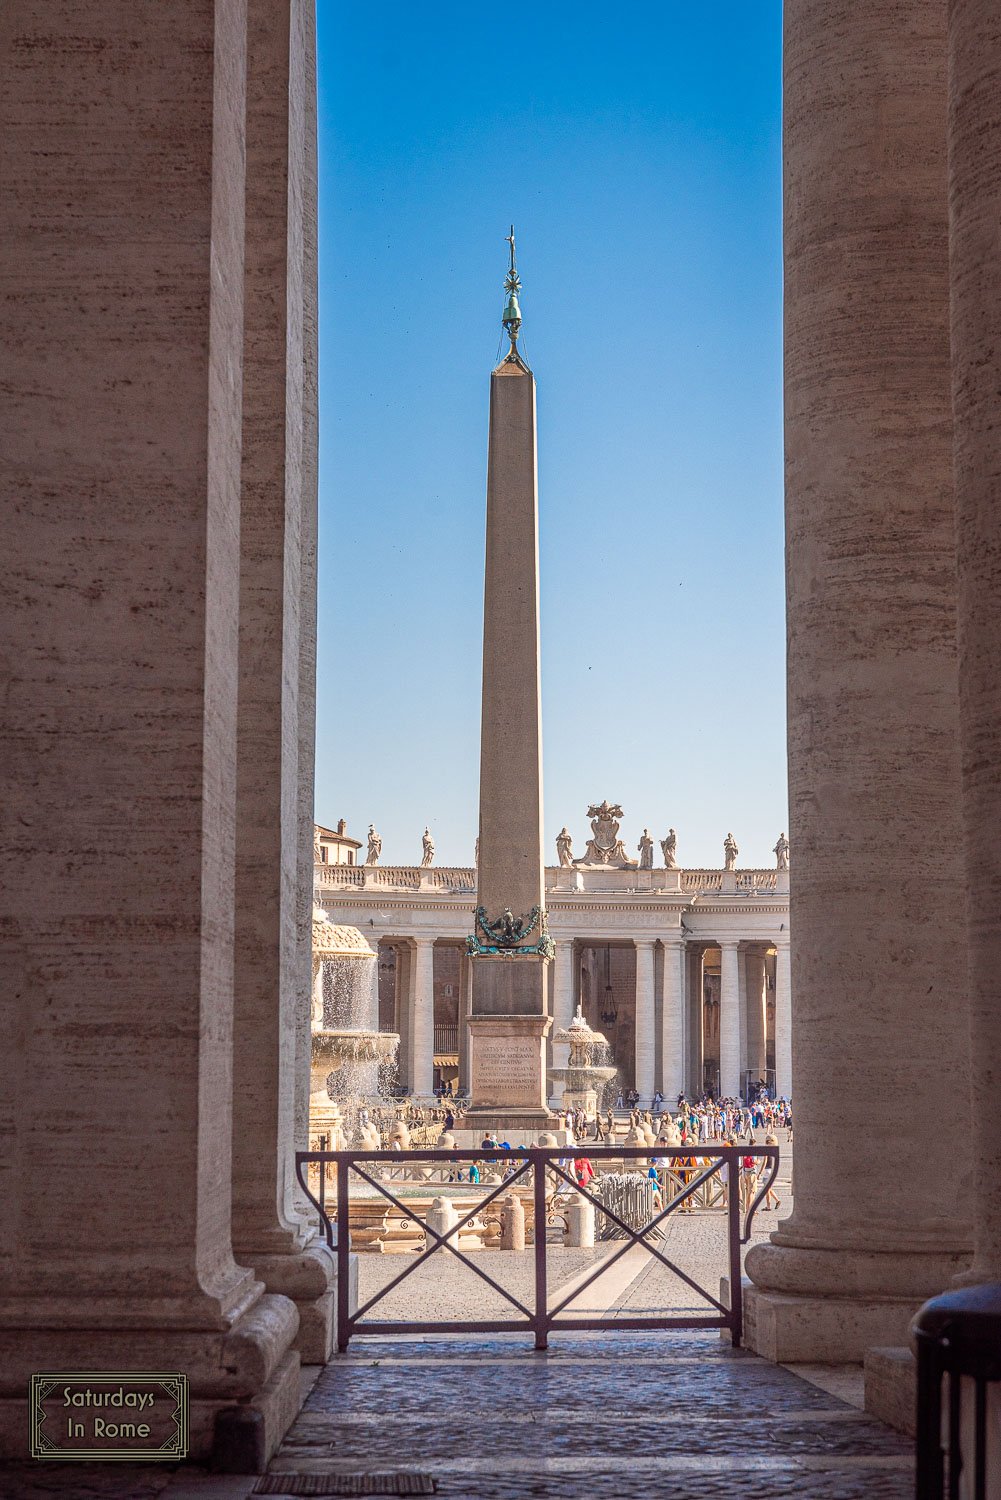 Obelisks In Rome - St. Peter’s